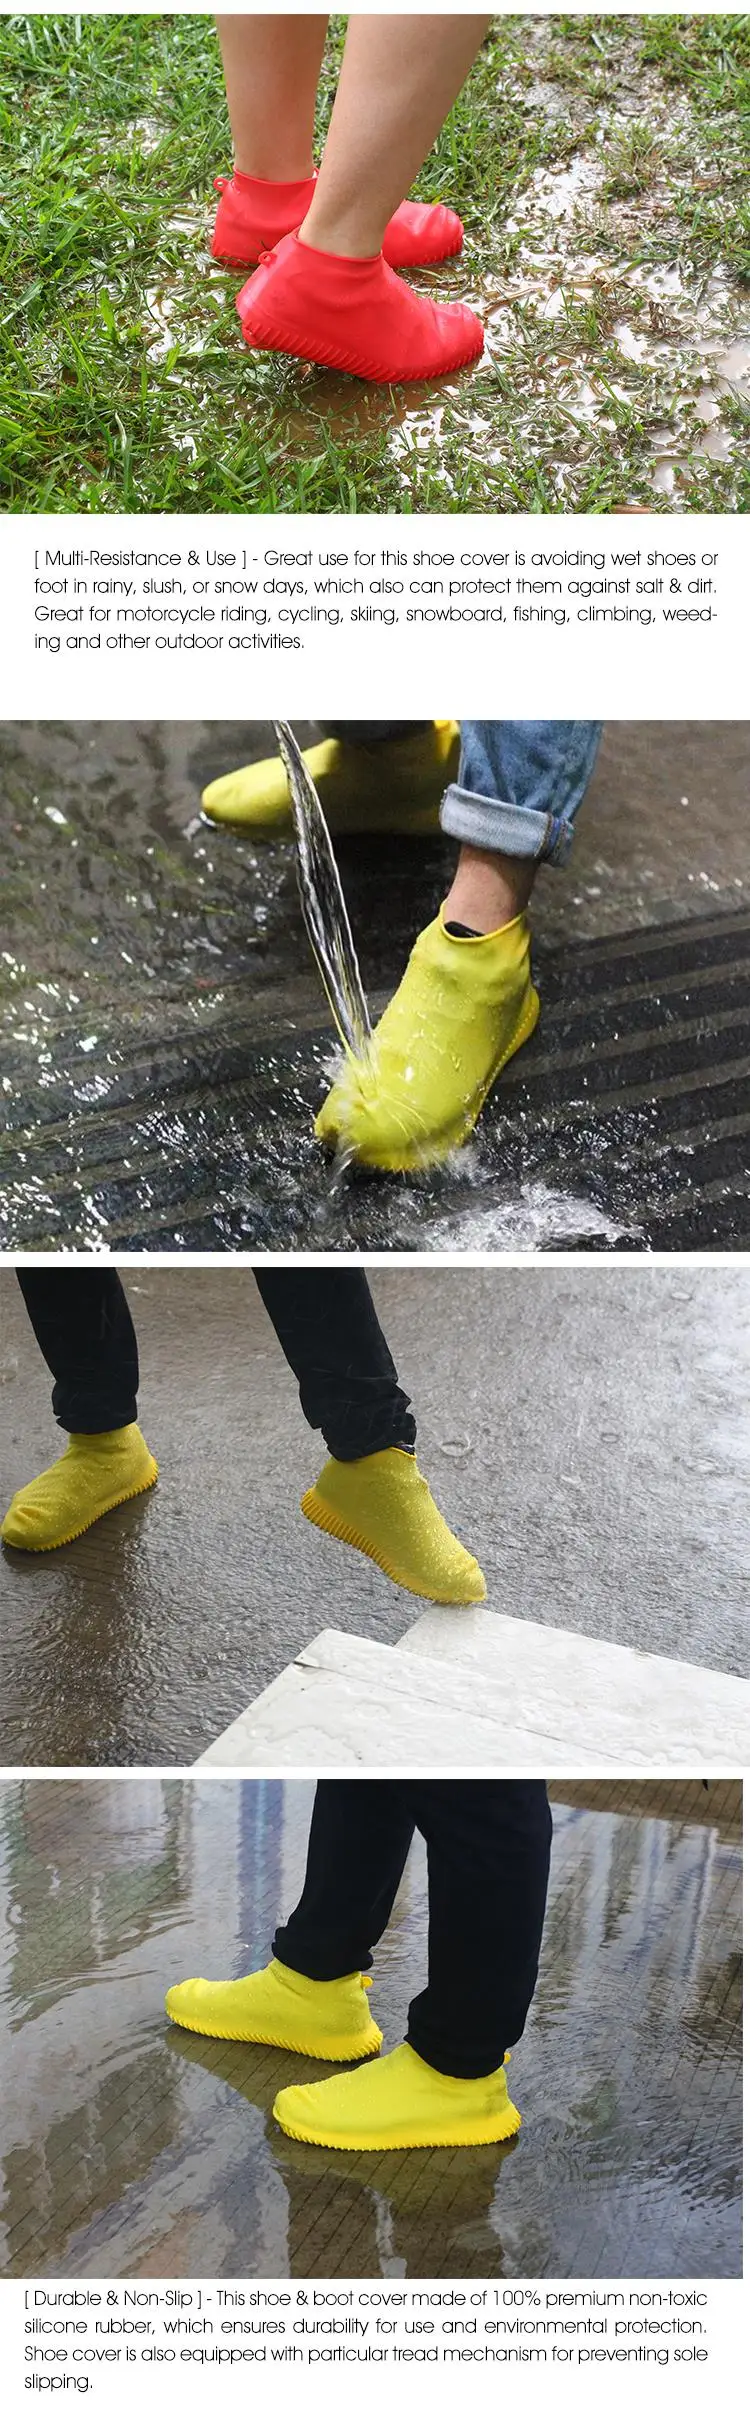 Reusable Rain shoe cover Silicone Waterproof shoe cover